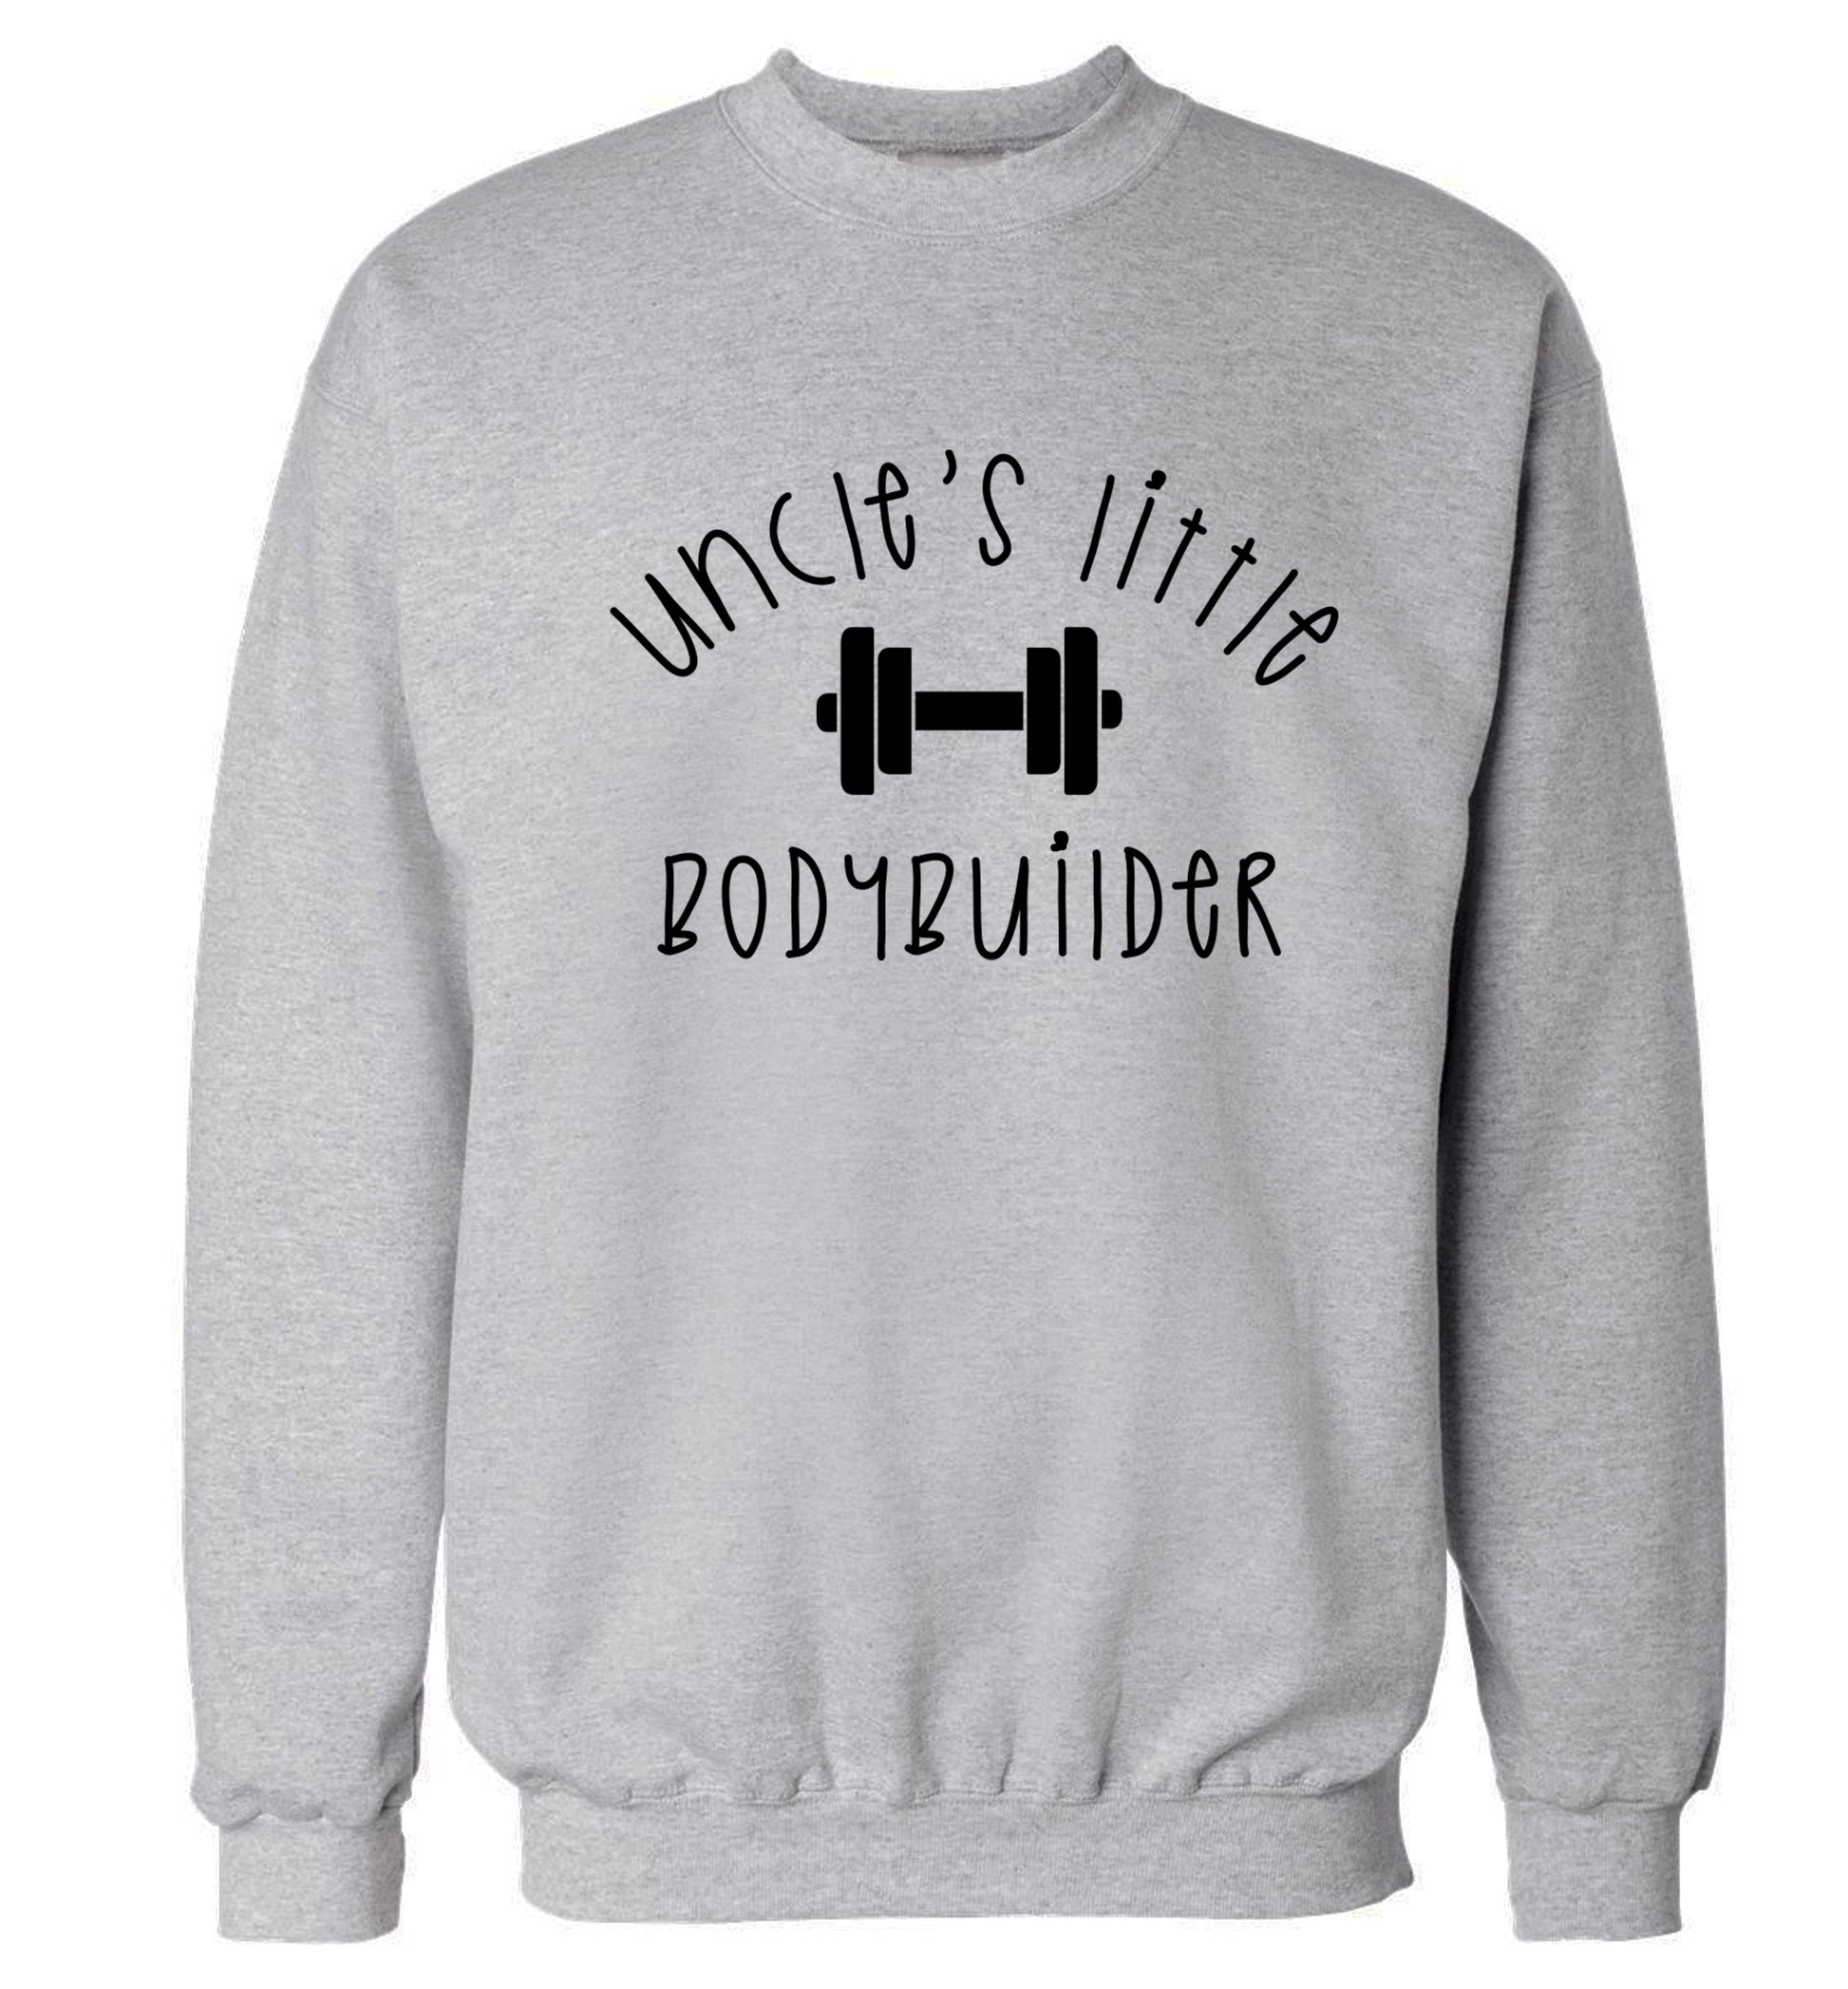 Uncle's little bodybuilder Adult's unisex grey Sweater 2XL